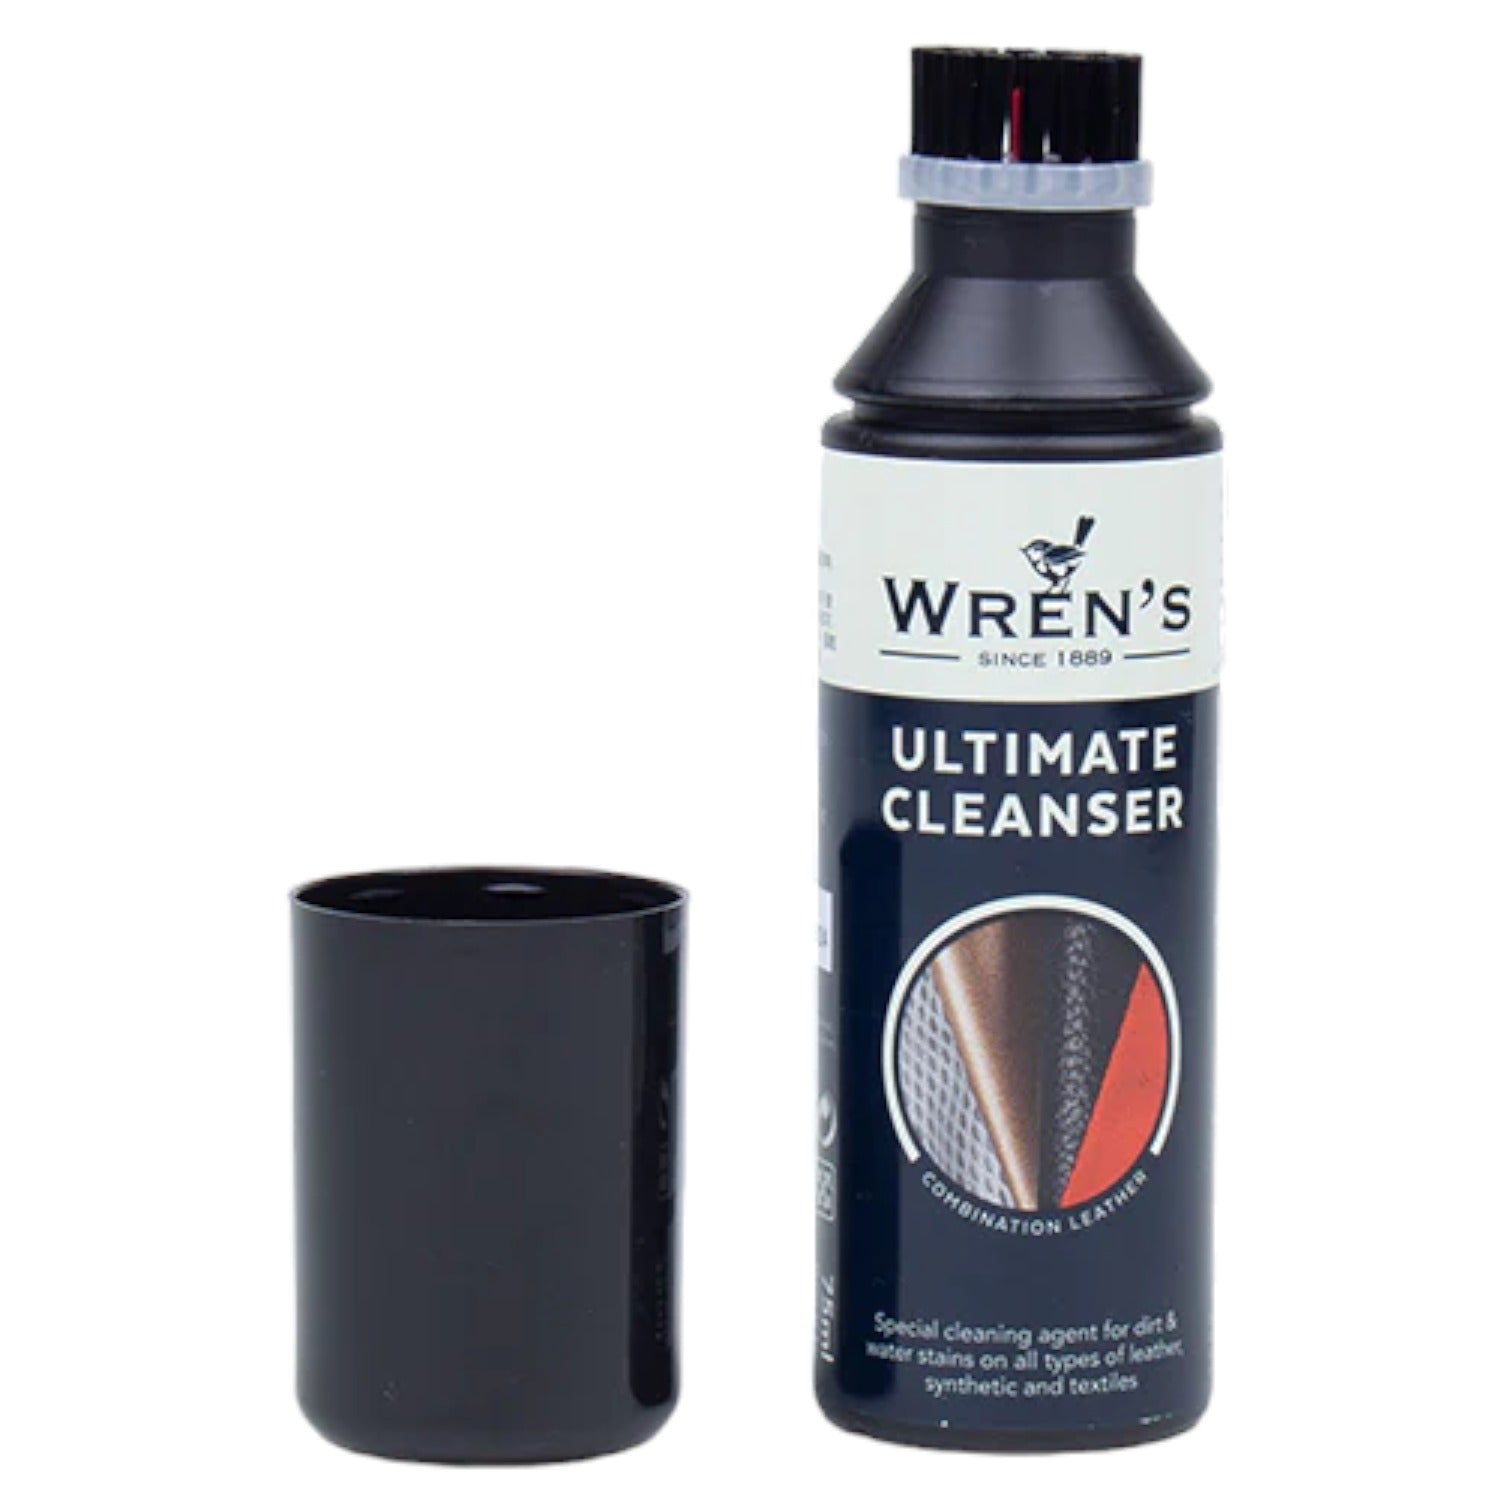 Wrens Ultimate Cleanser 75ml